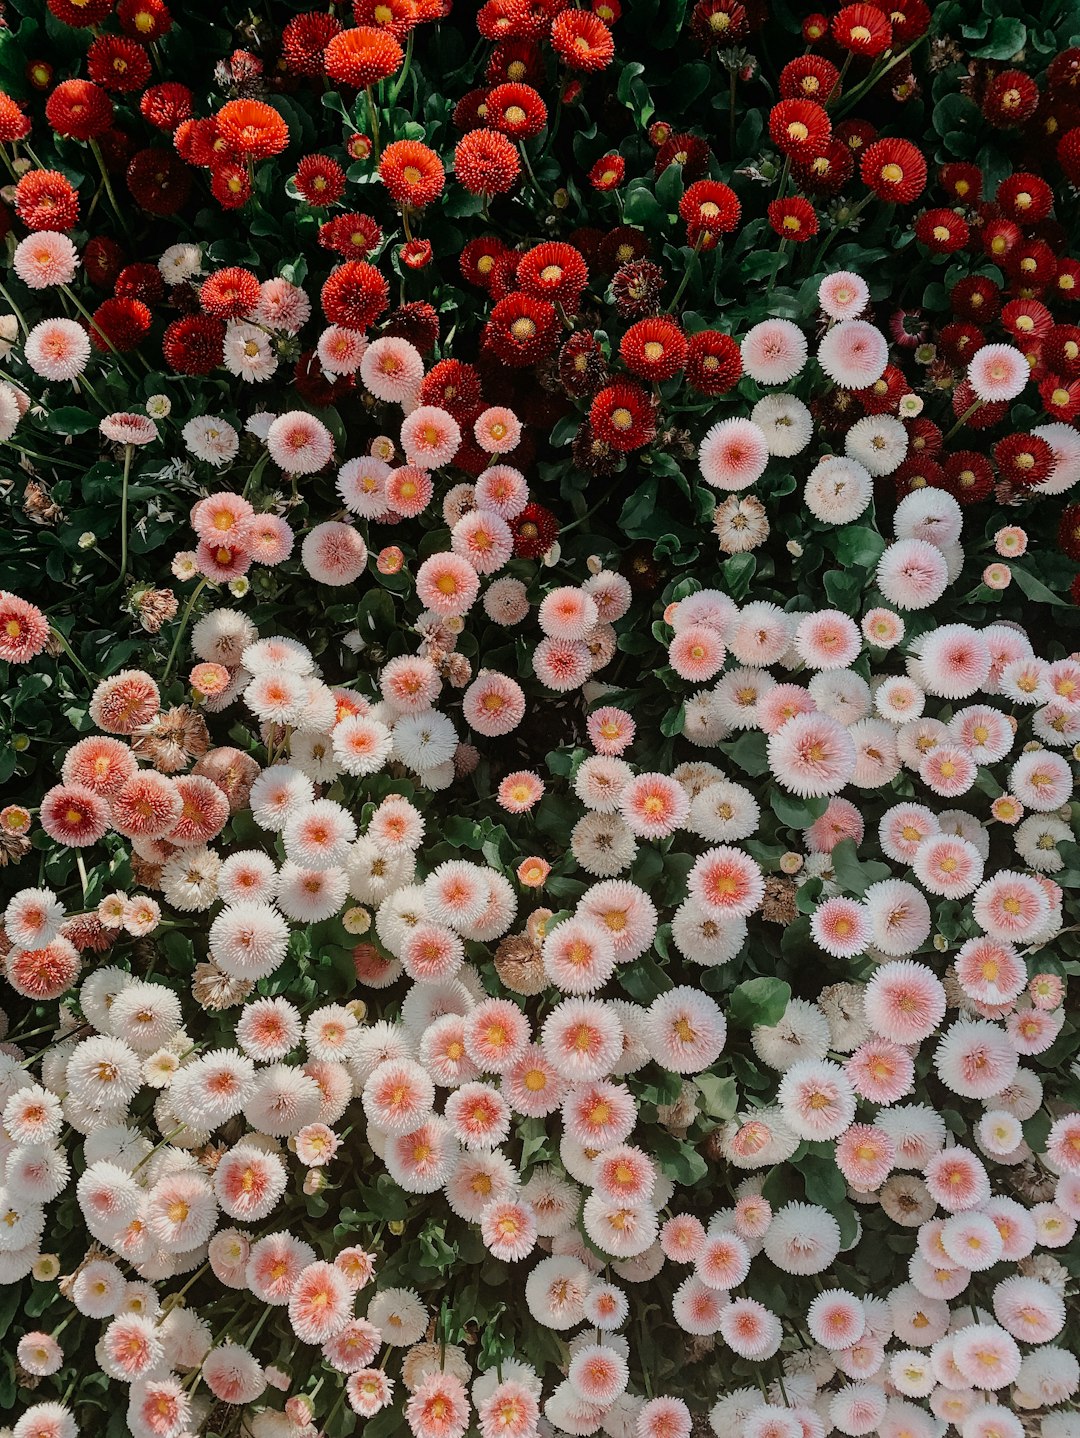 multicolored flowers in bloom